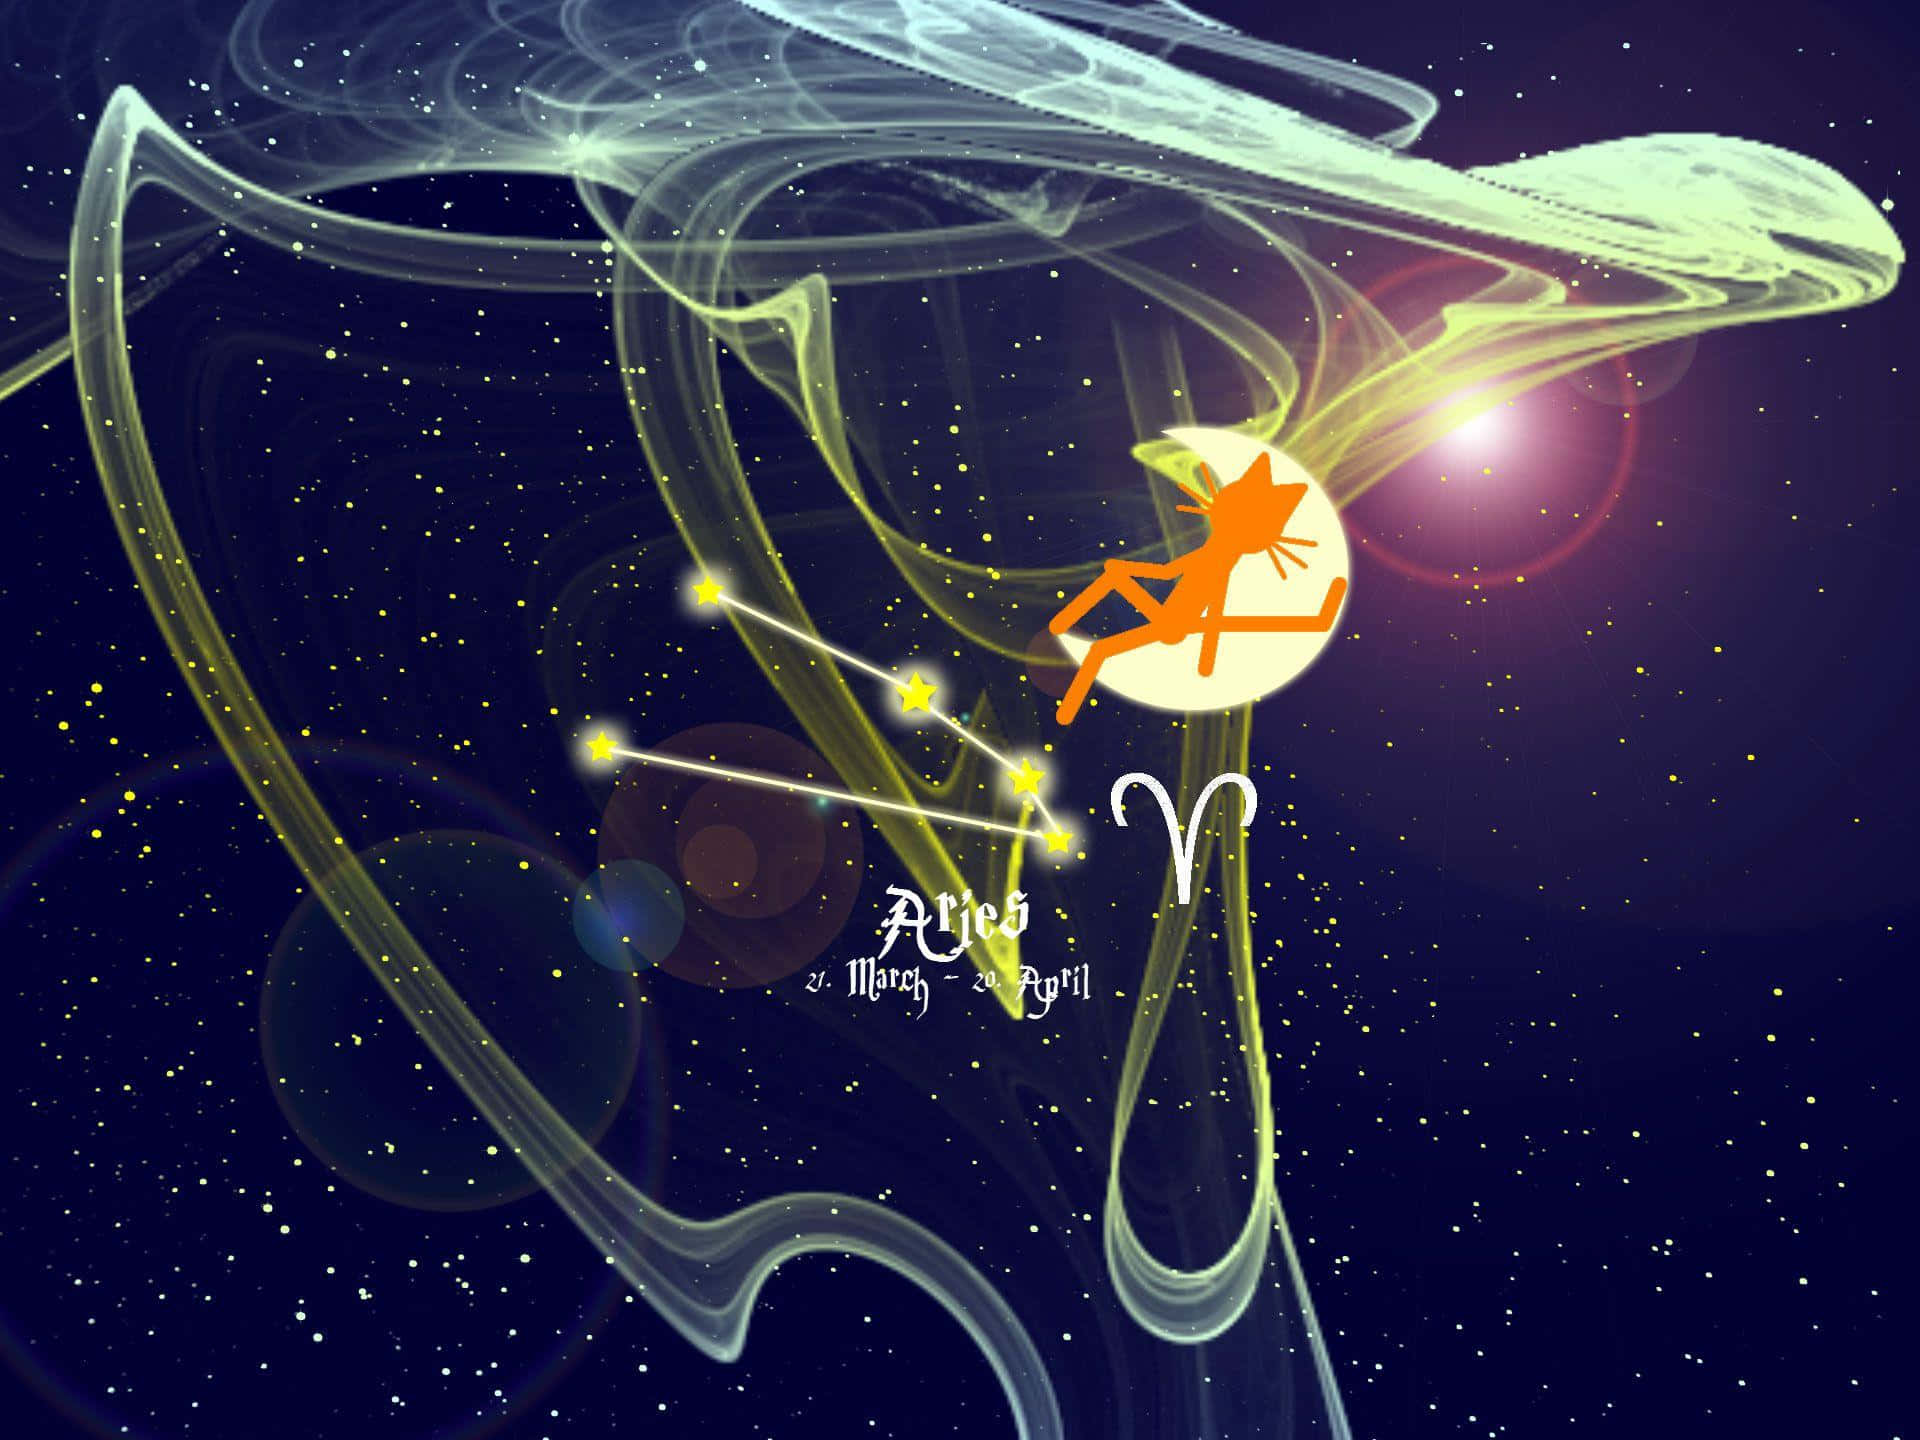 "stunning Illustration Of The Virgo Constellation"